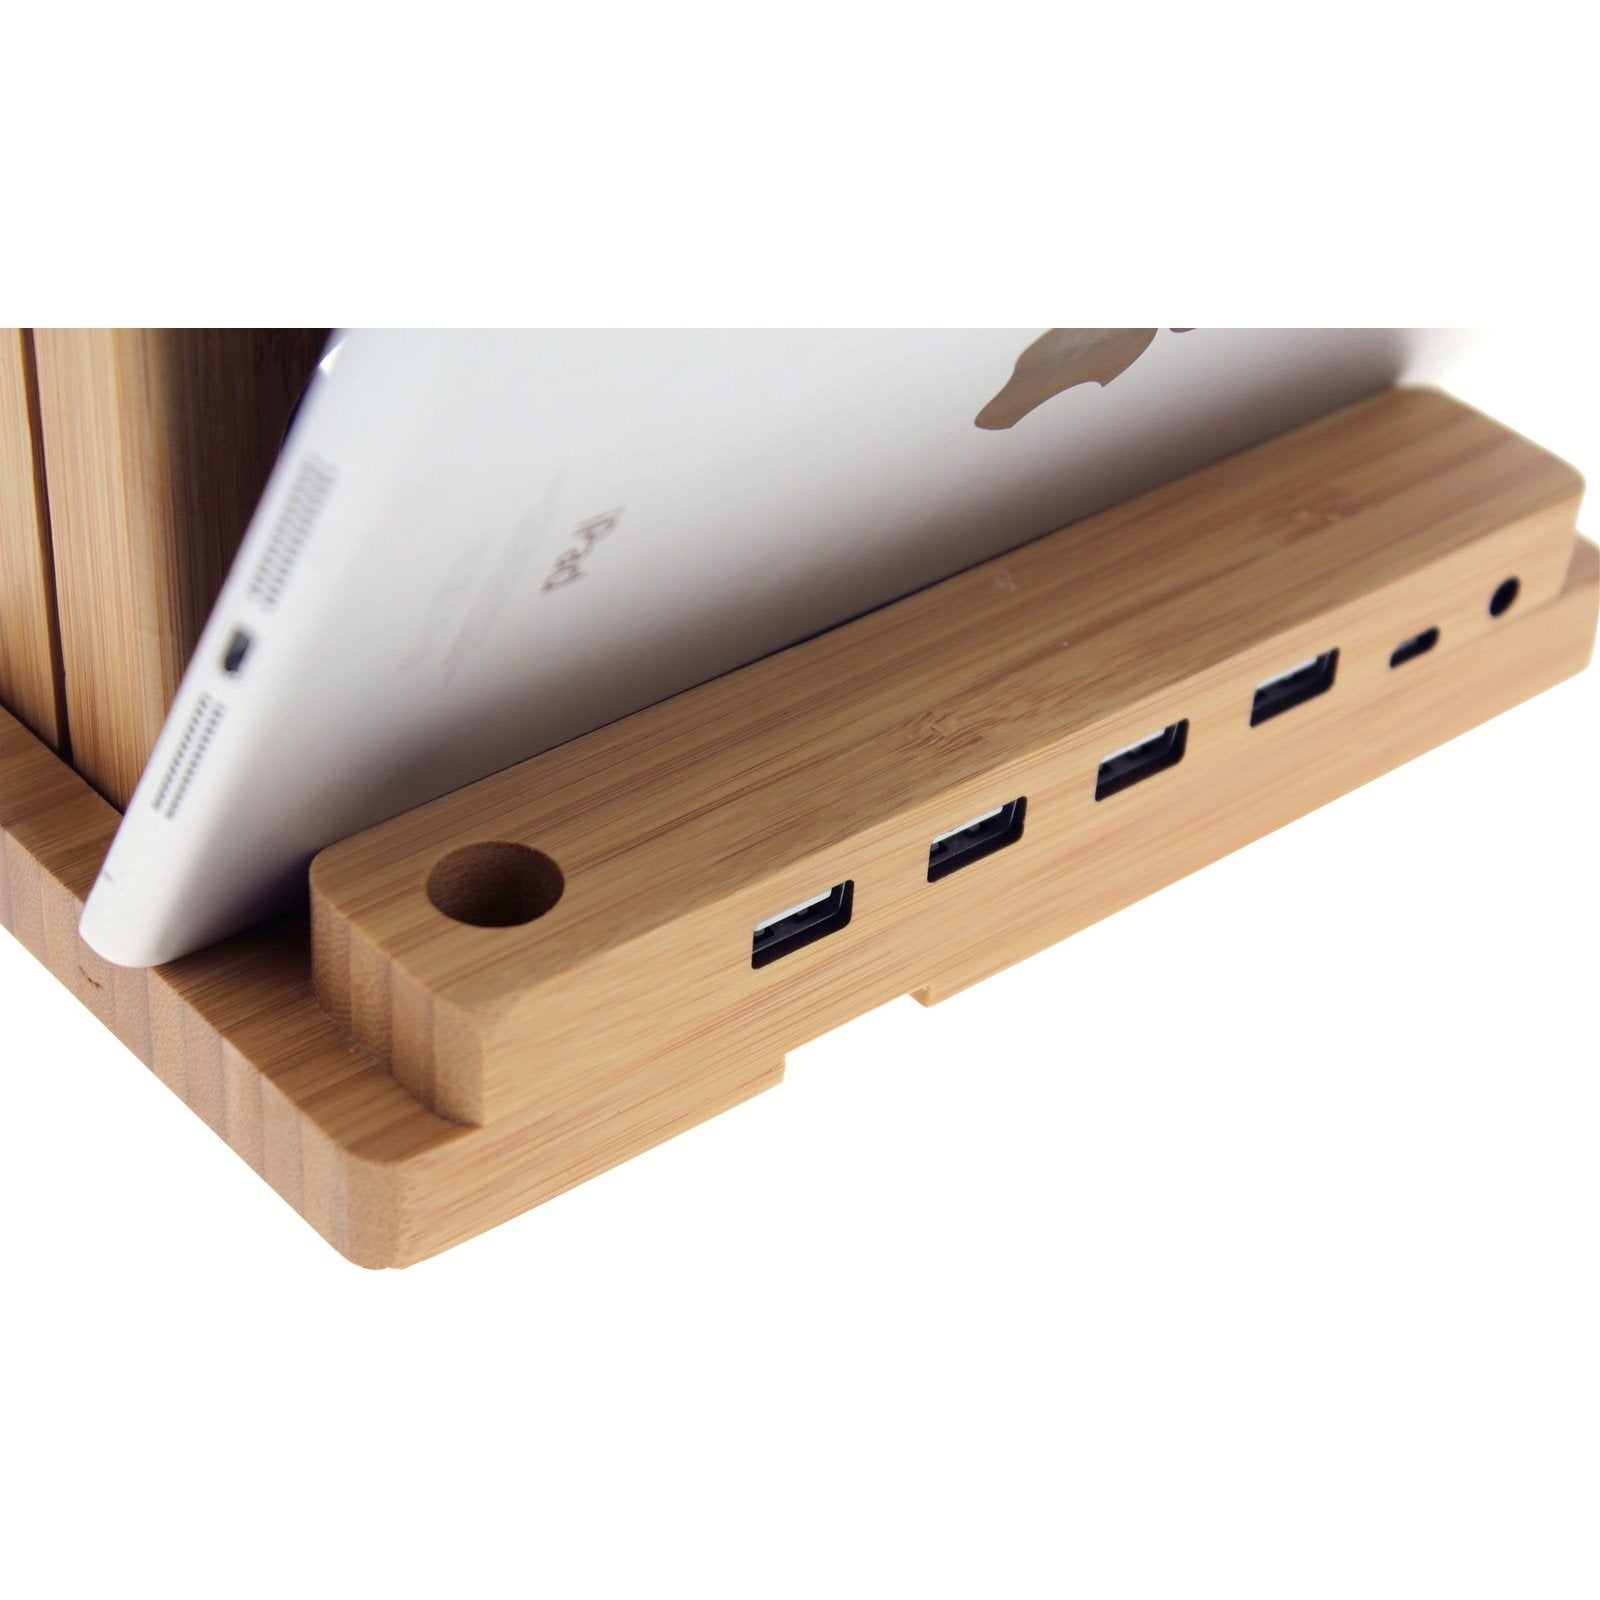 United Entertainment USB Laadstation/Houder voor Telefoon, iPad en Horloge - Bamboe